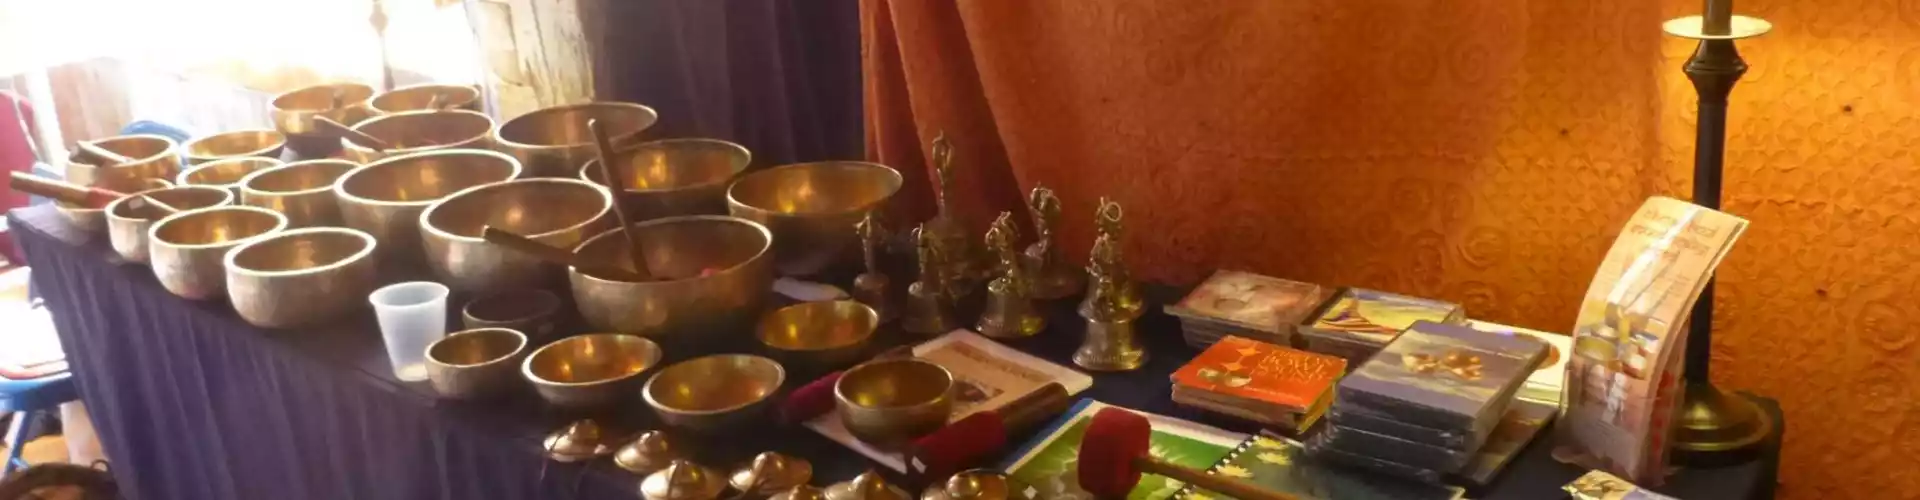 Using Tibetan Bowls for Small Group Meditations